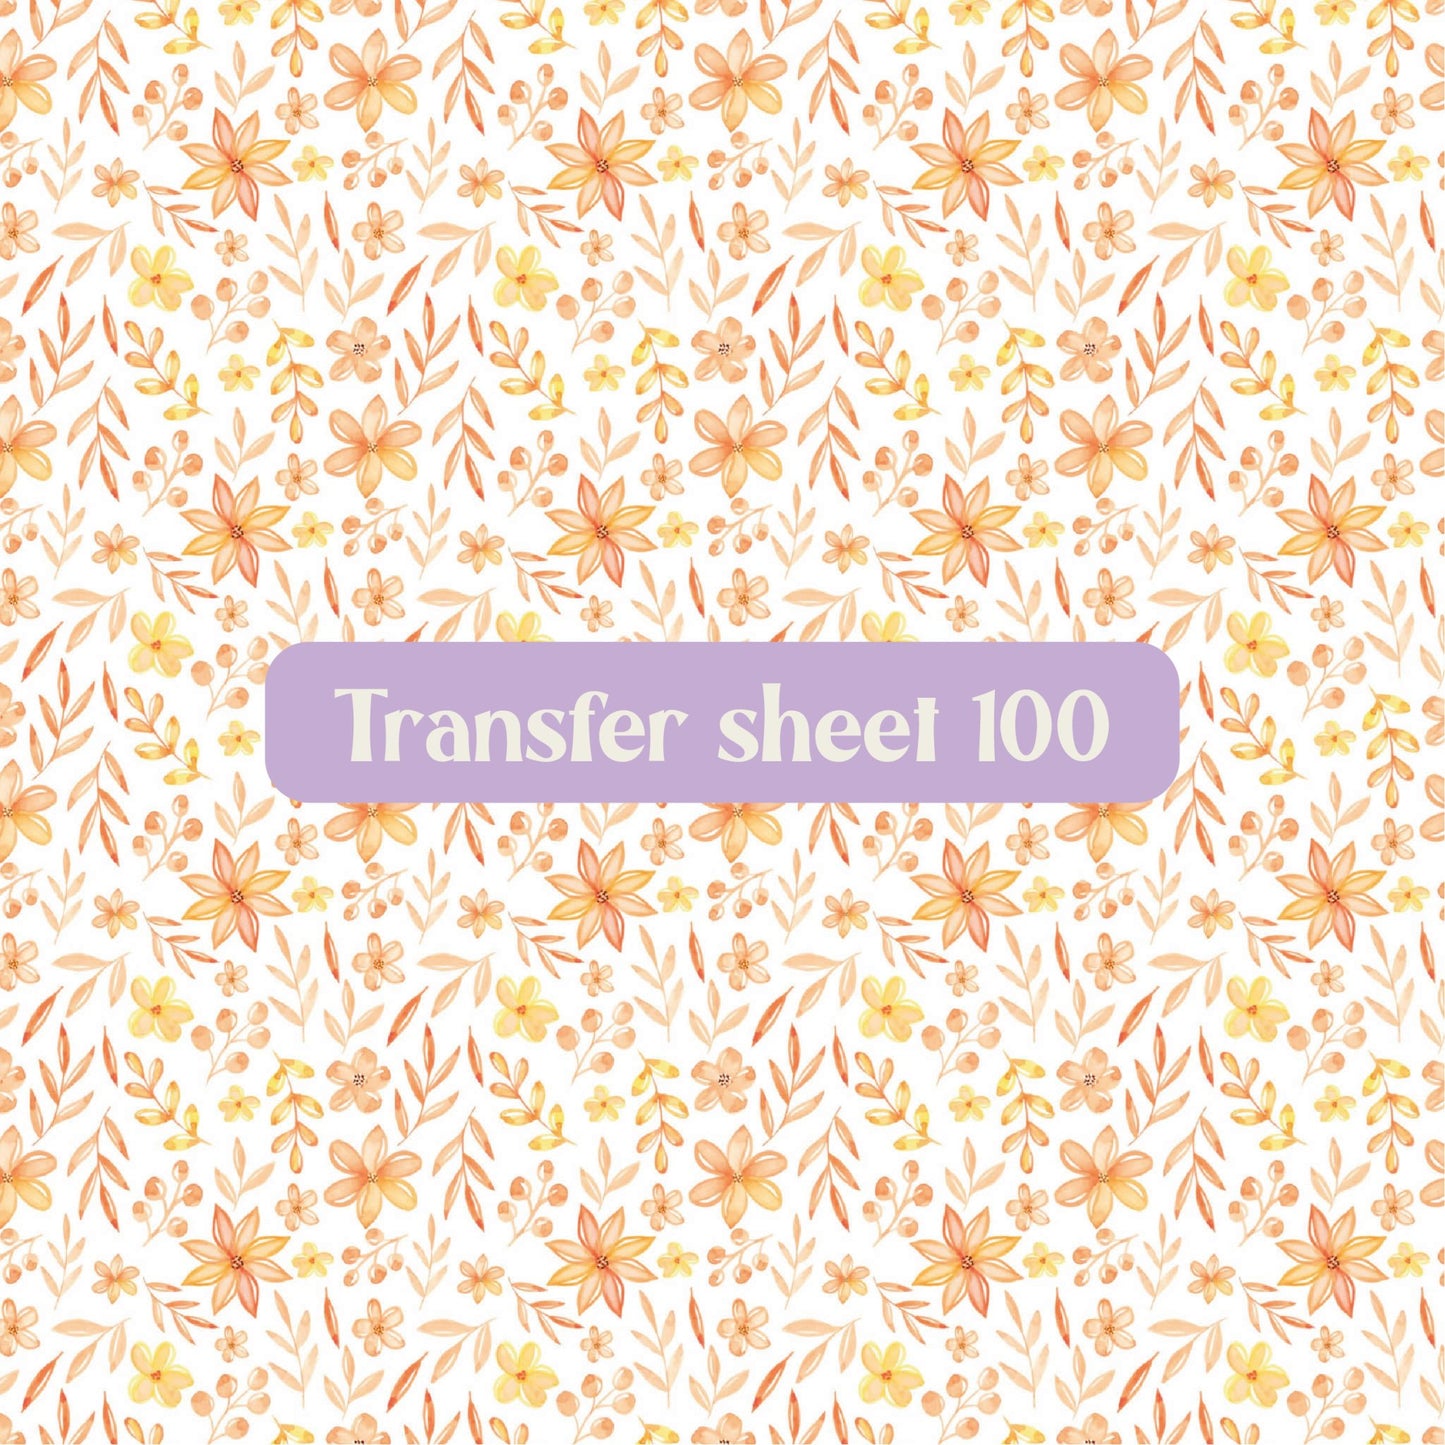 Transfer sheet 100 - Transfer paper - CLN Atelier